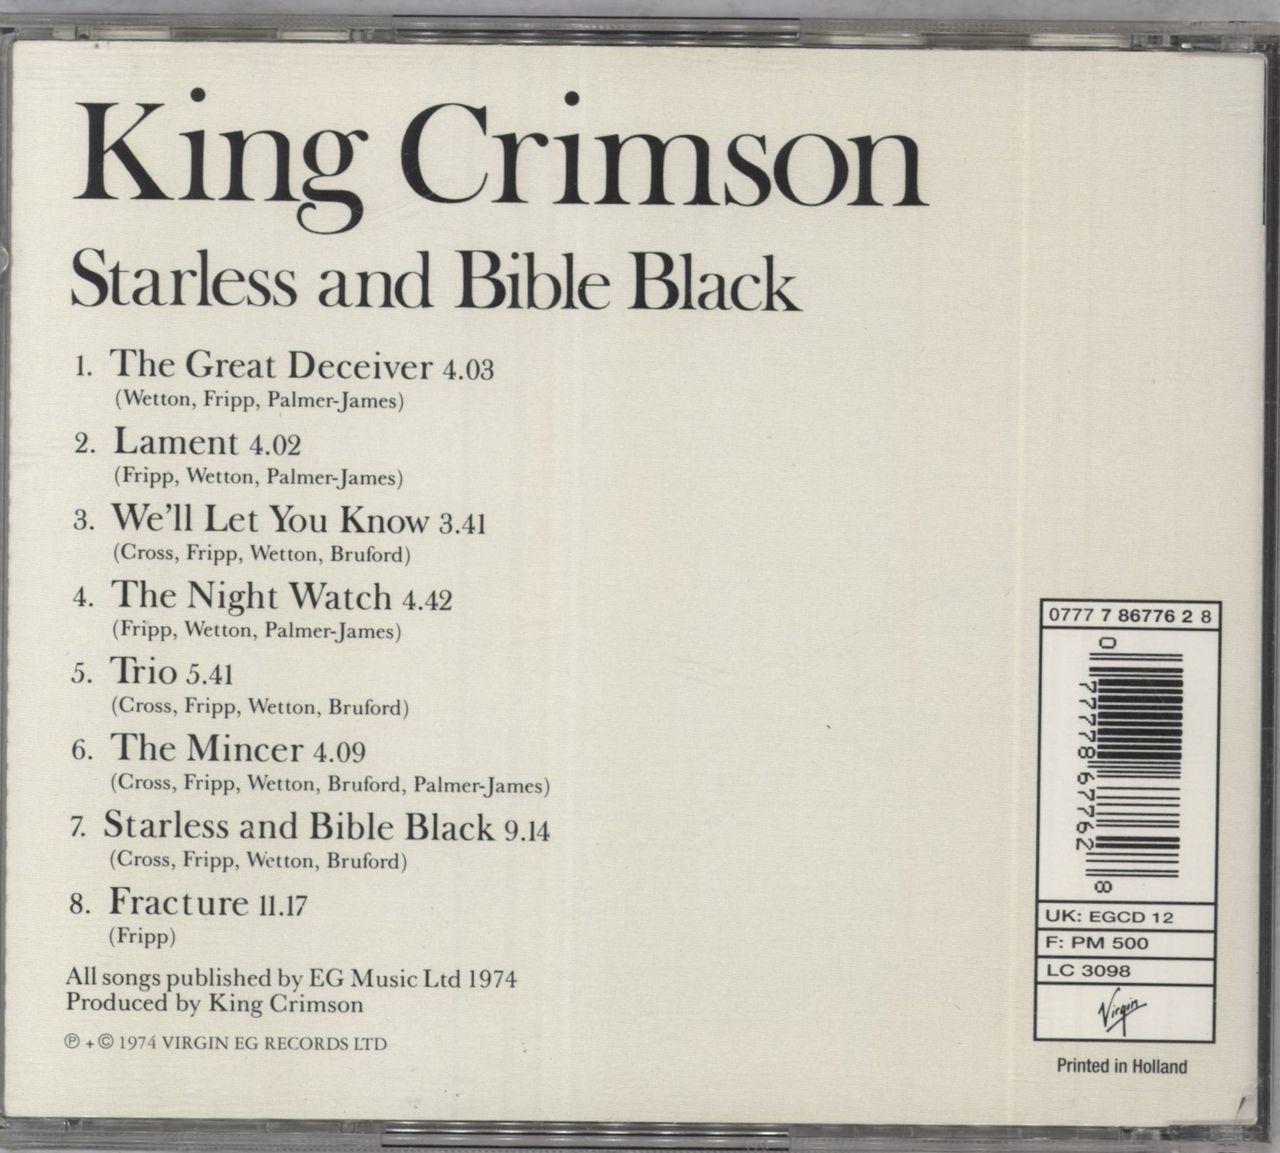 King Crimson Starless And Bible Black UK CD album — RareVinyl.com